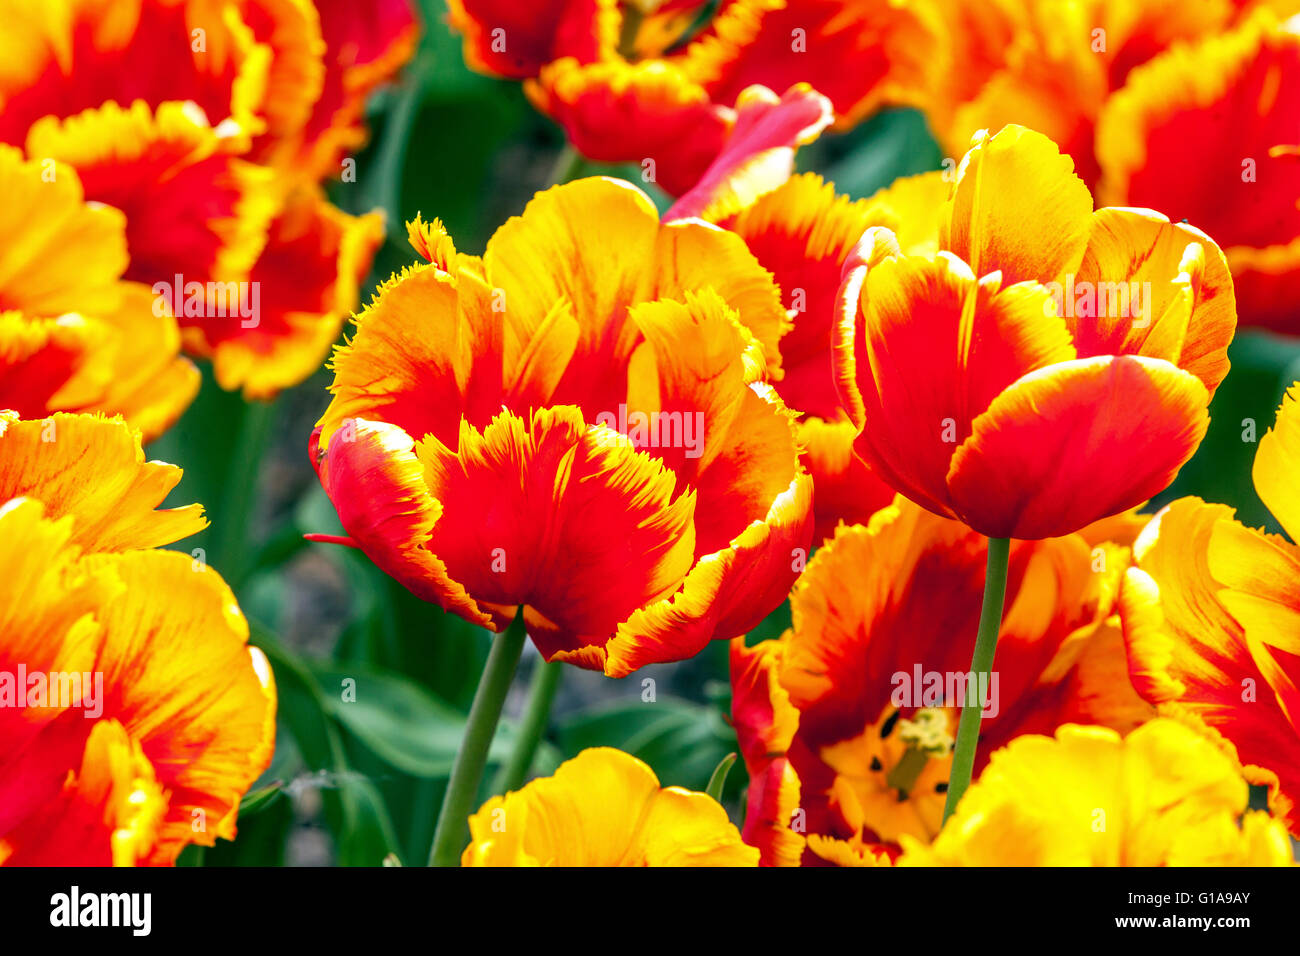 Jardin de tulipes fleuris, perroquet de tulipes de Tulipa 'Bright Parrot' Banque D'Images